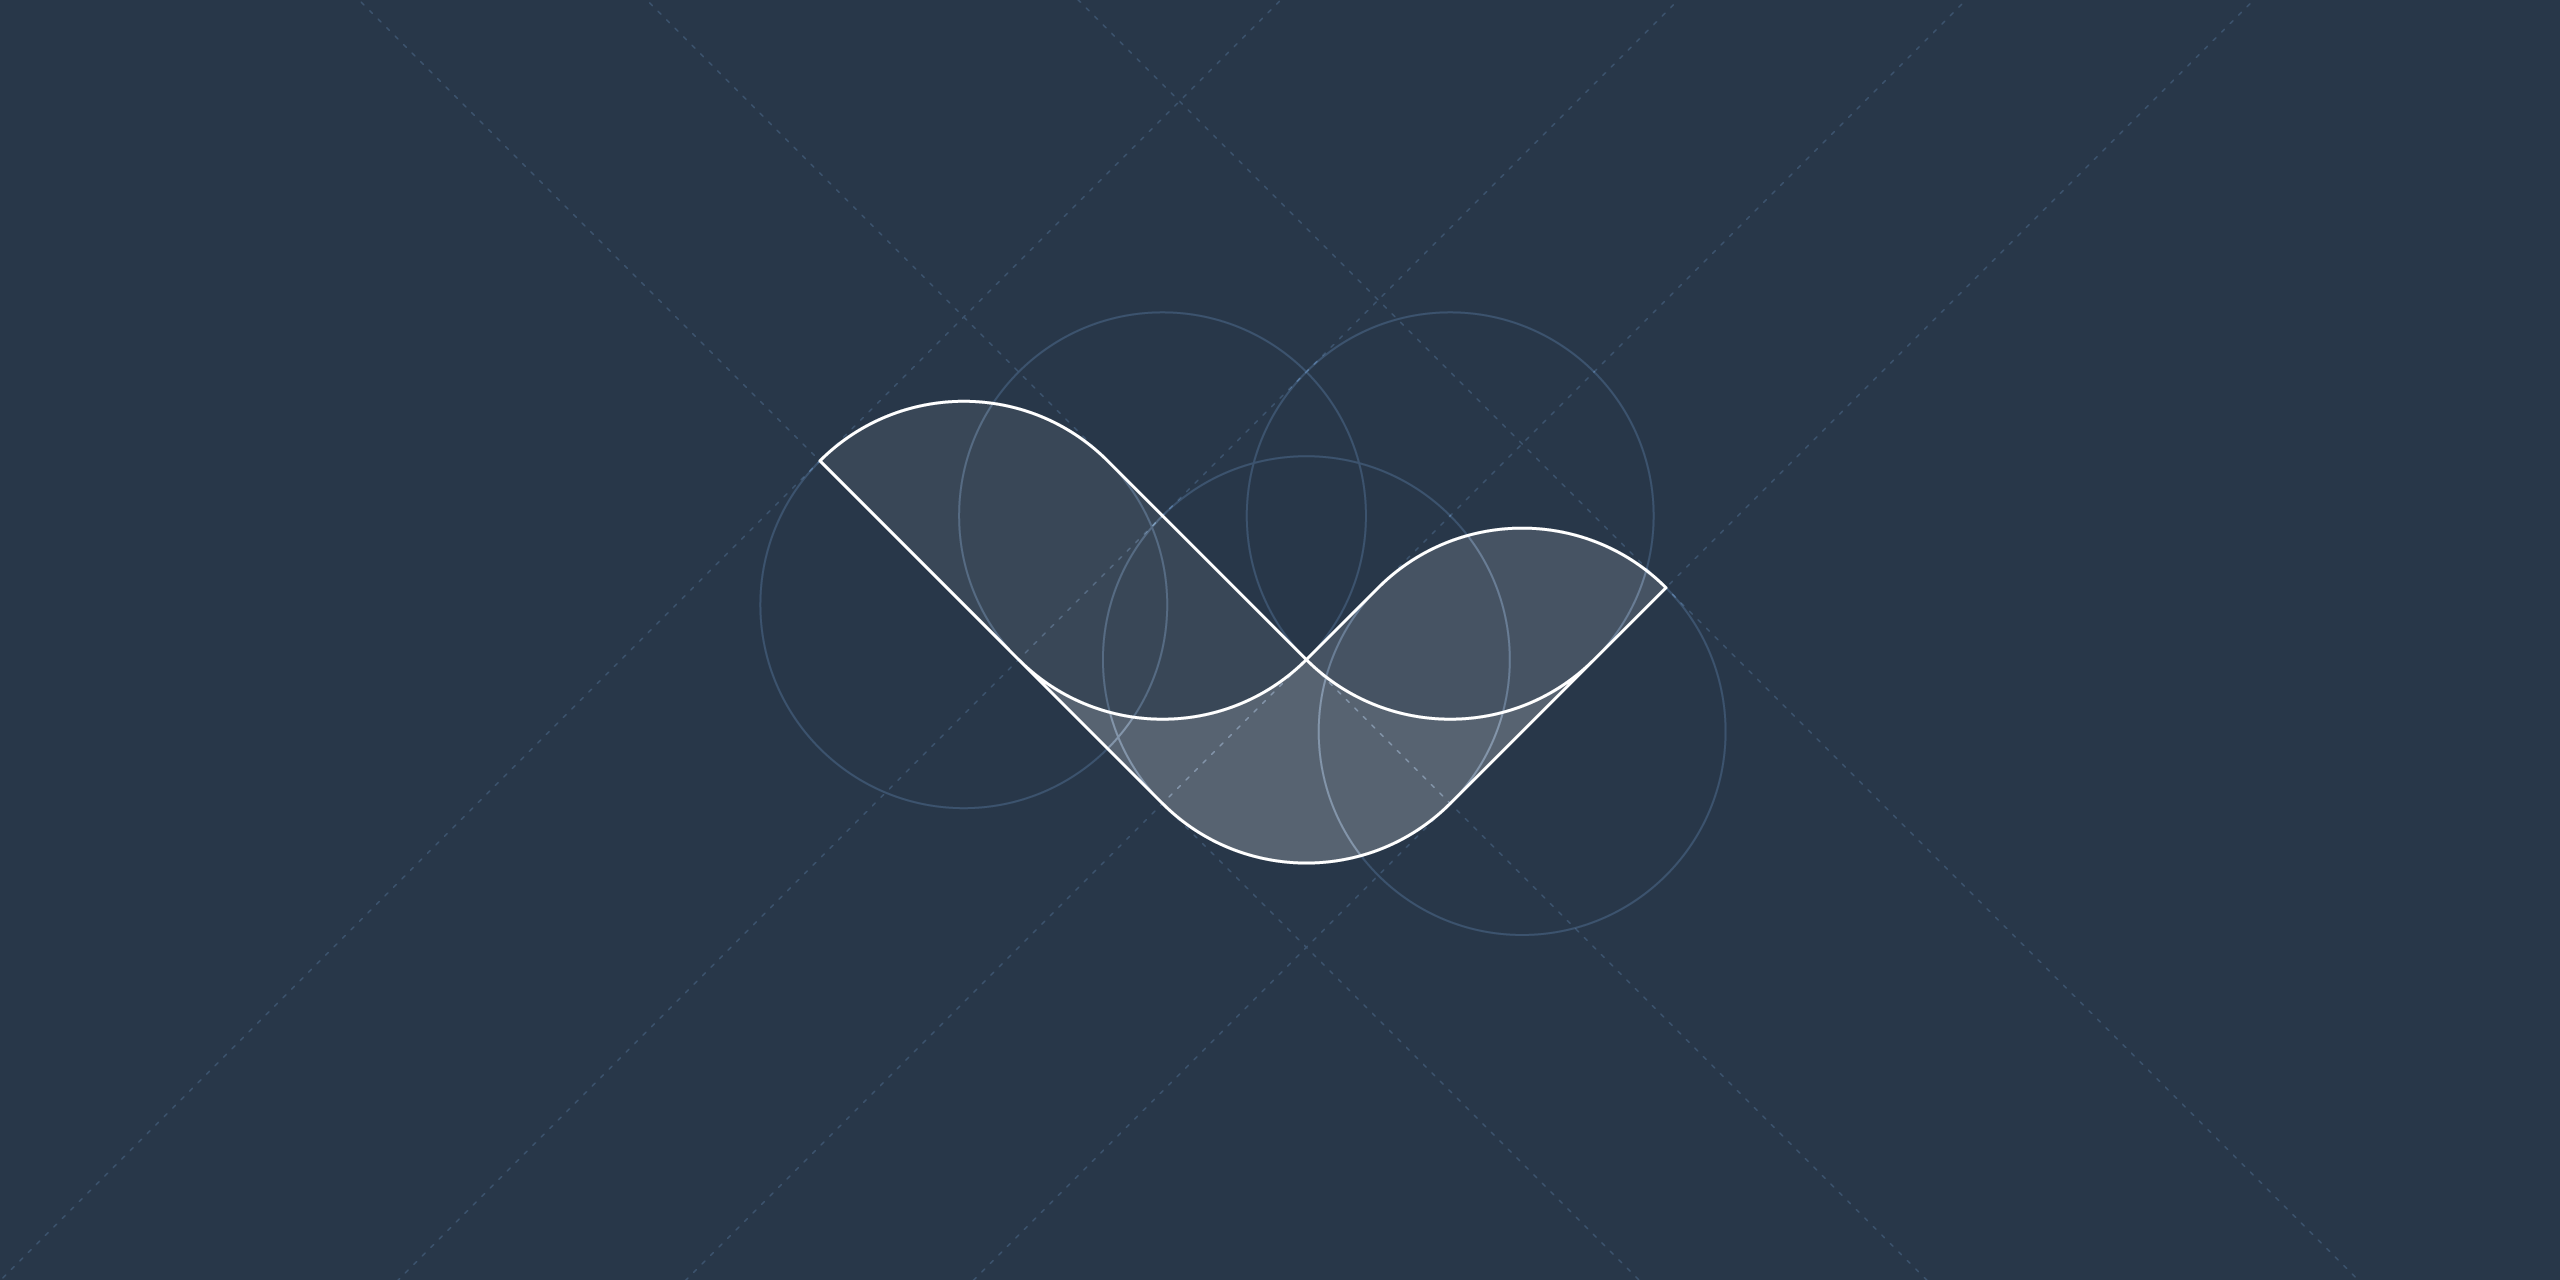 4-Lindy-Logo-Grids-Design-by-Brandforma-Bohdan-Harbaruk